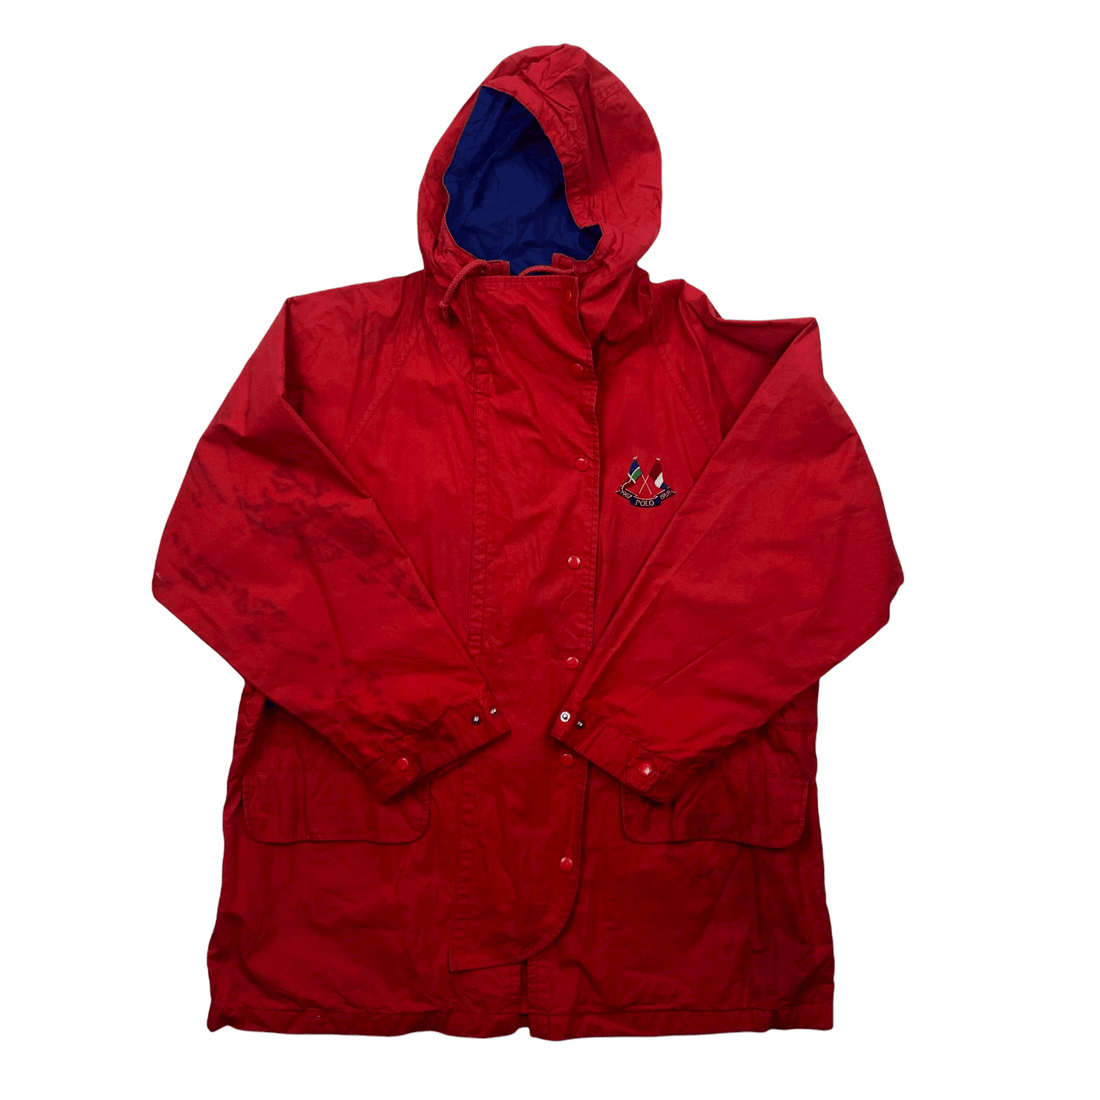 Vintage 90s Red Polo Ralph Lauren Jacket/ Coat - Small - The Streetwear Studio